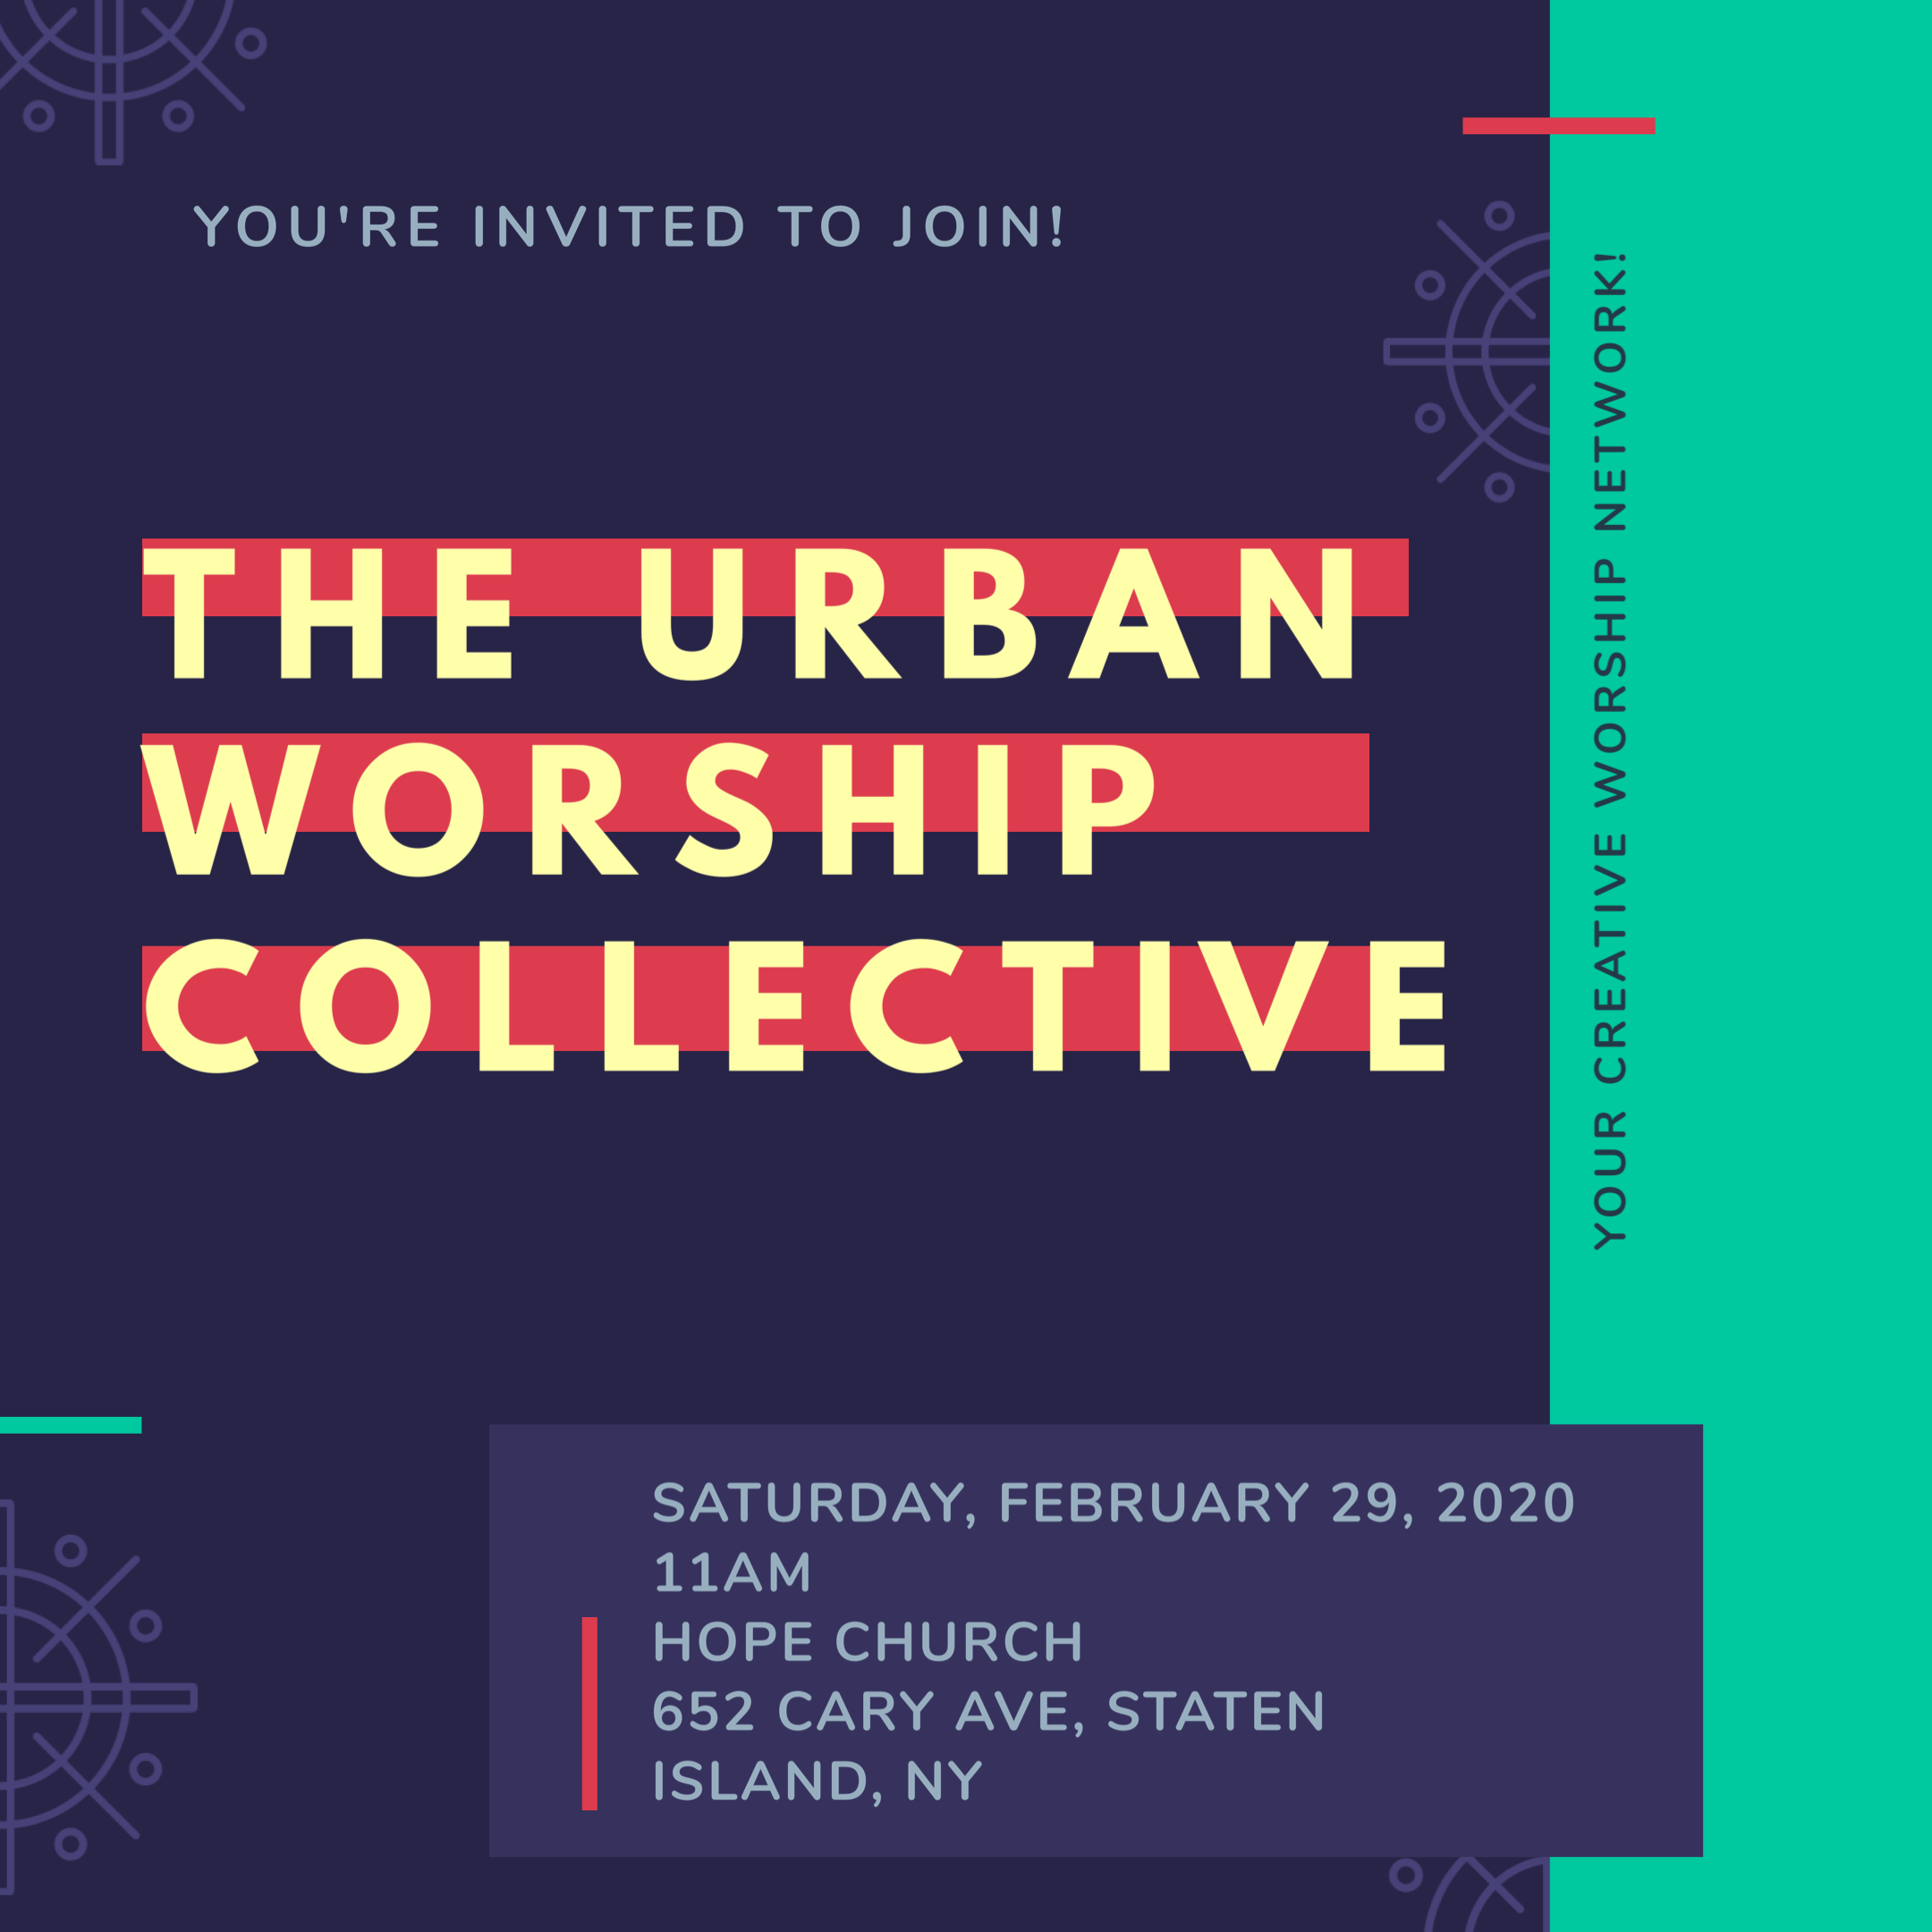 The Urban Worship Collective